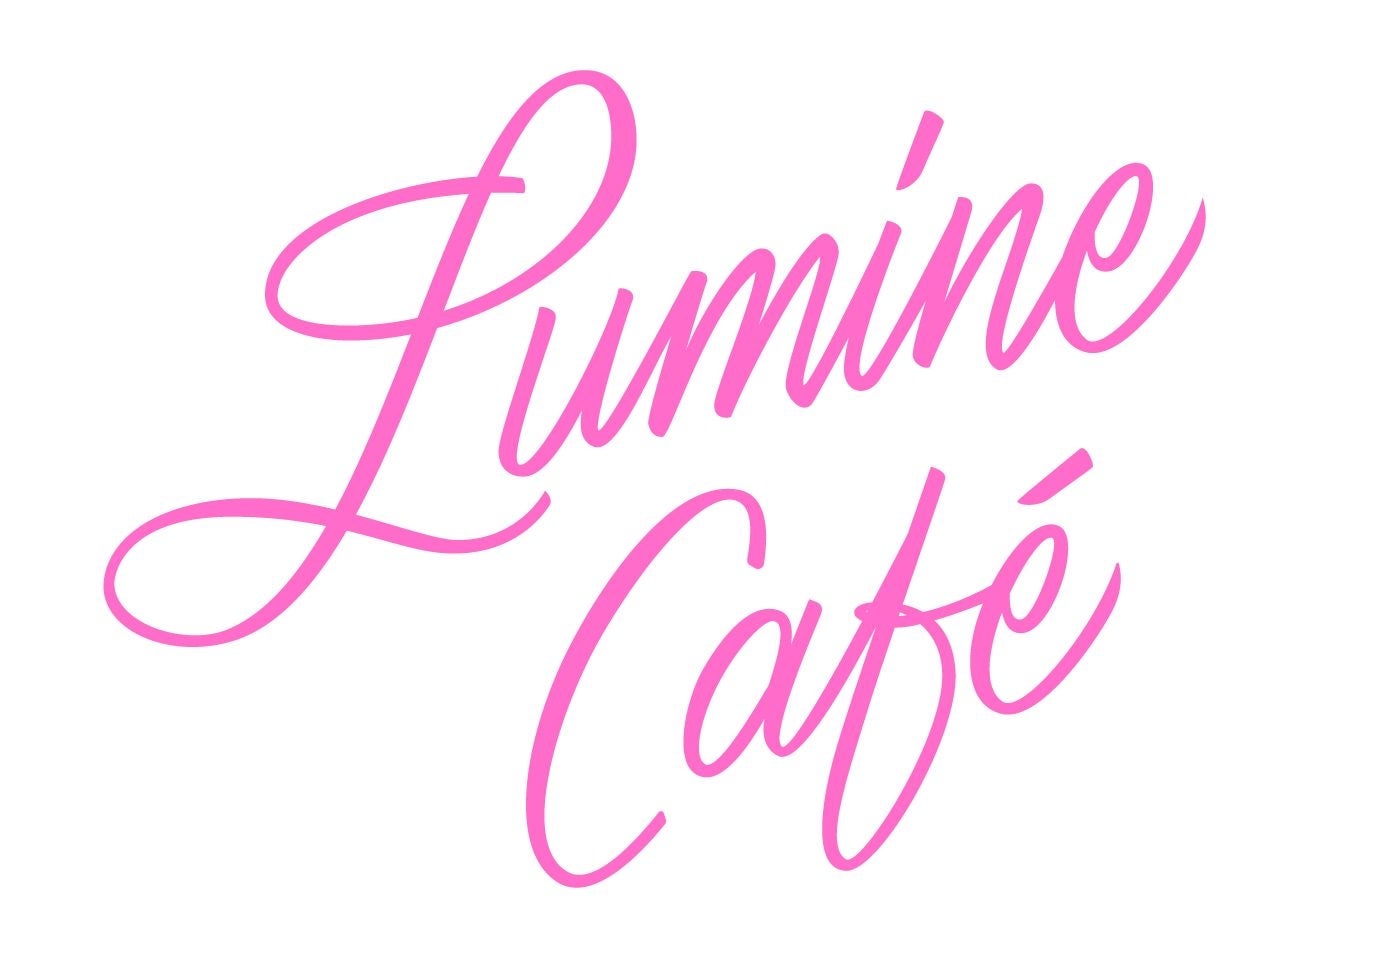 Lumine Cafe／画像提供：ルミネ